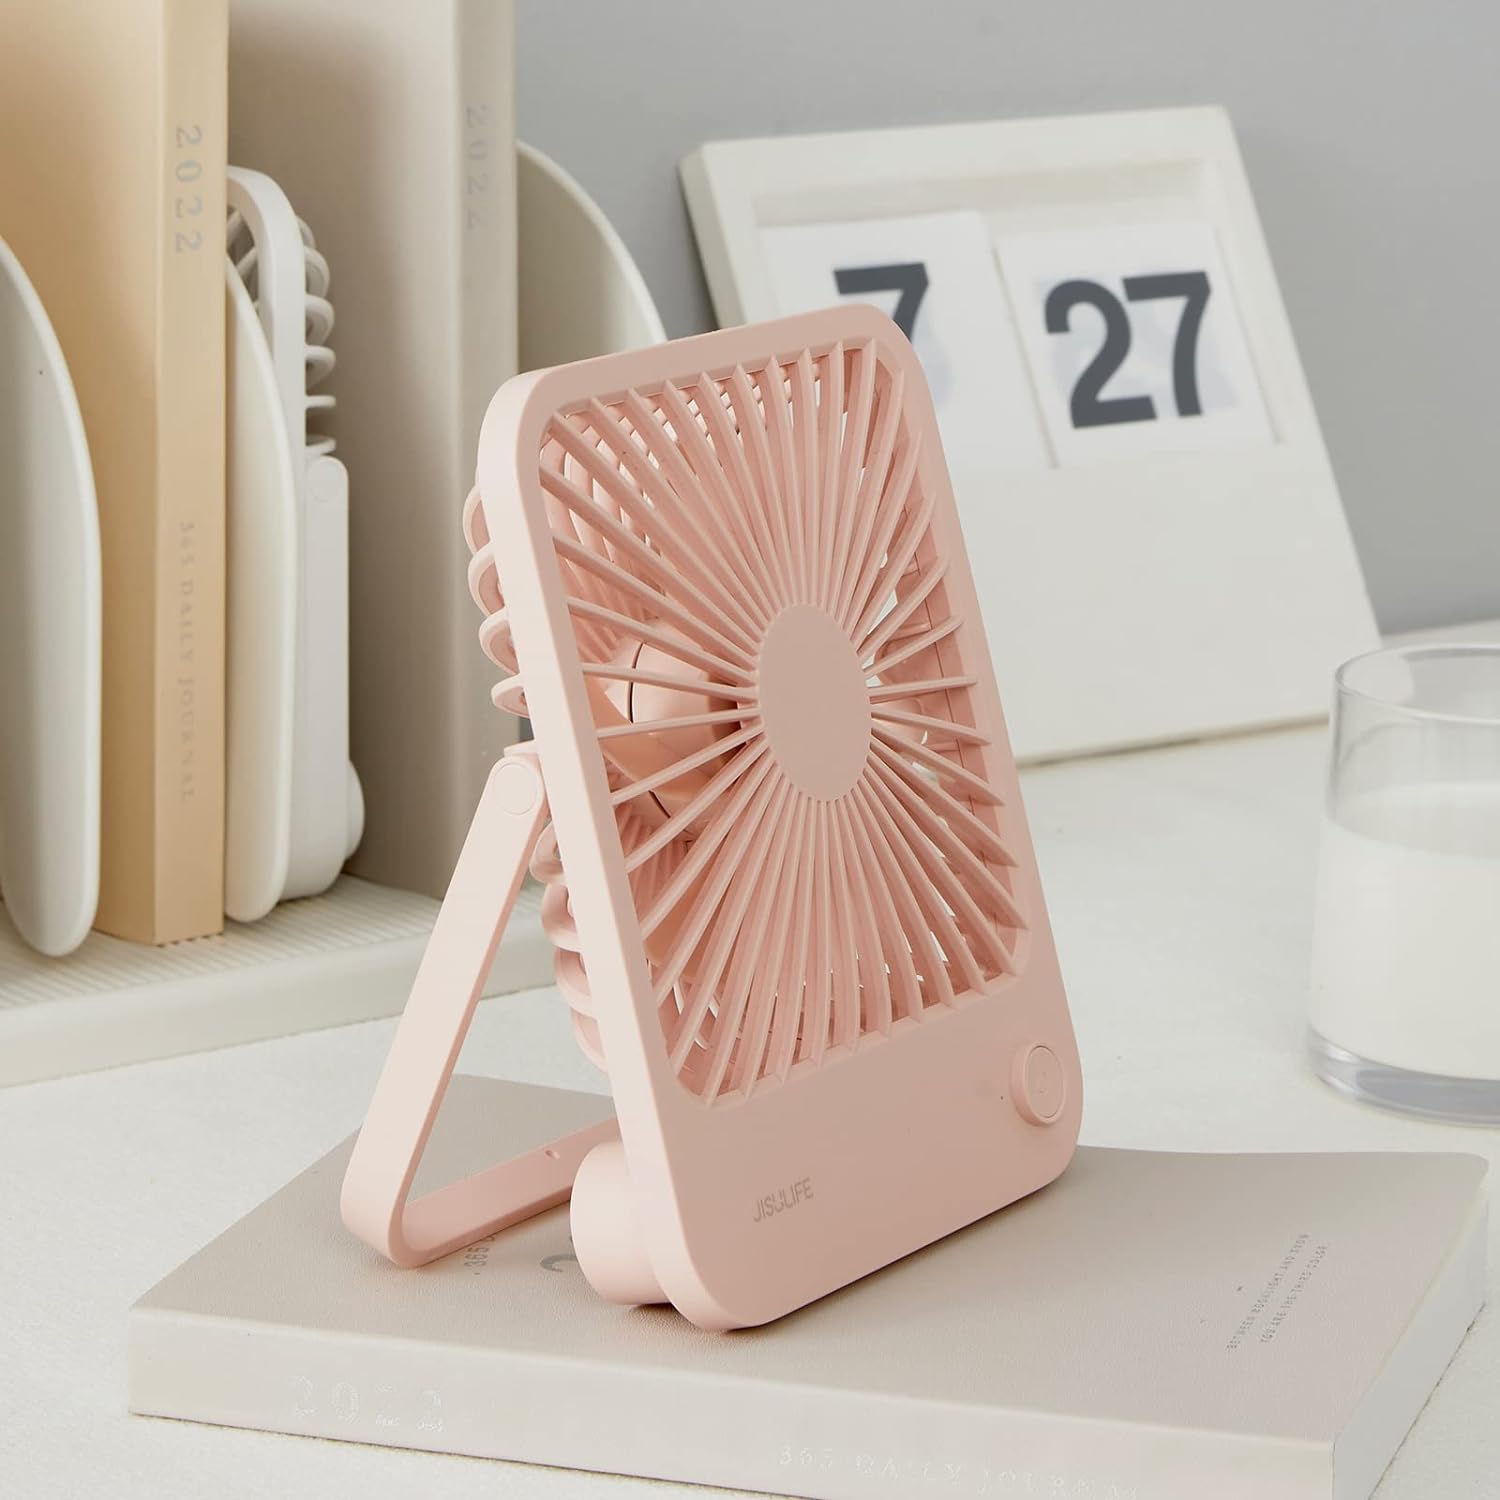 JISULIFE Desk Fan Battery Rechargable Fan4500mAh 180Foldable Portable Personal Fan, 4 Speeds Adjustable Long Battery-life for Home Office Travel Outdoor Gifts for Women Men-Pink